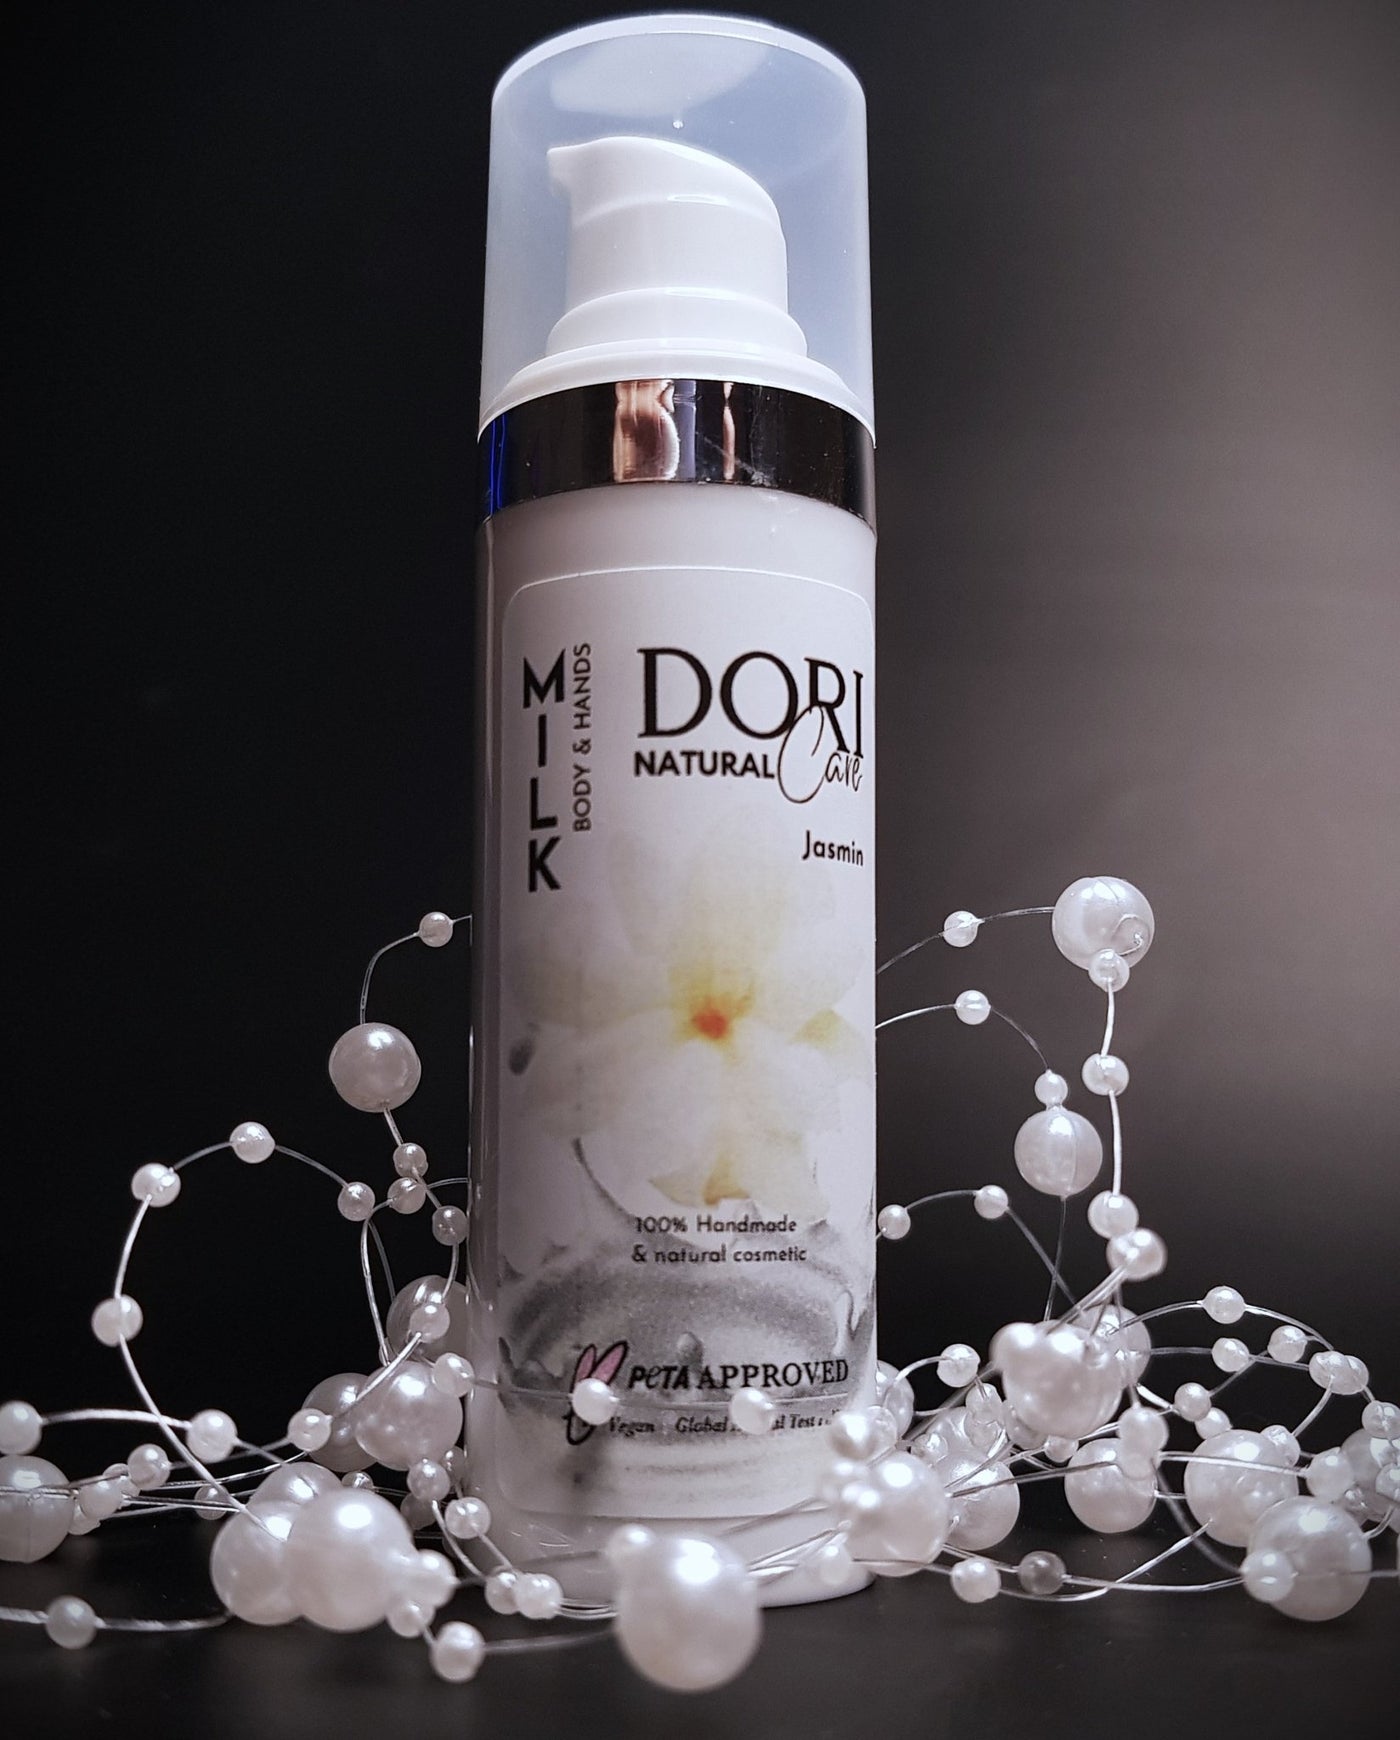 DORICare Natural - MILK - Body & Hands - Jasmin, 30 ml - Doriana Cosmetics GmbH